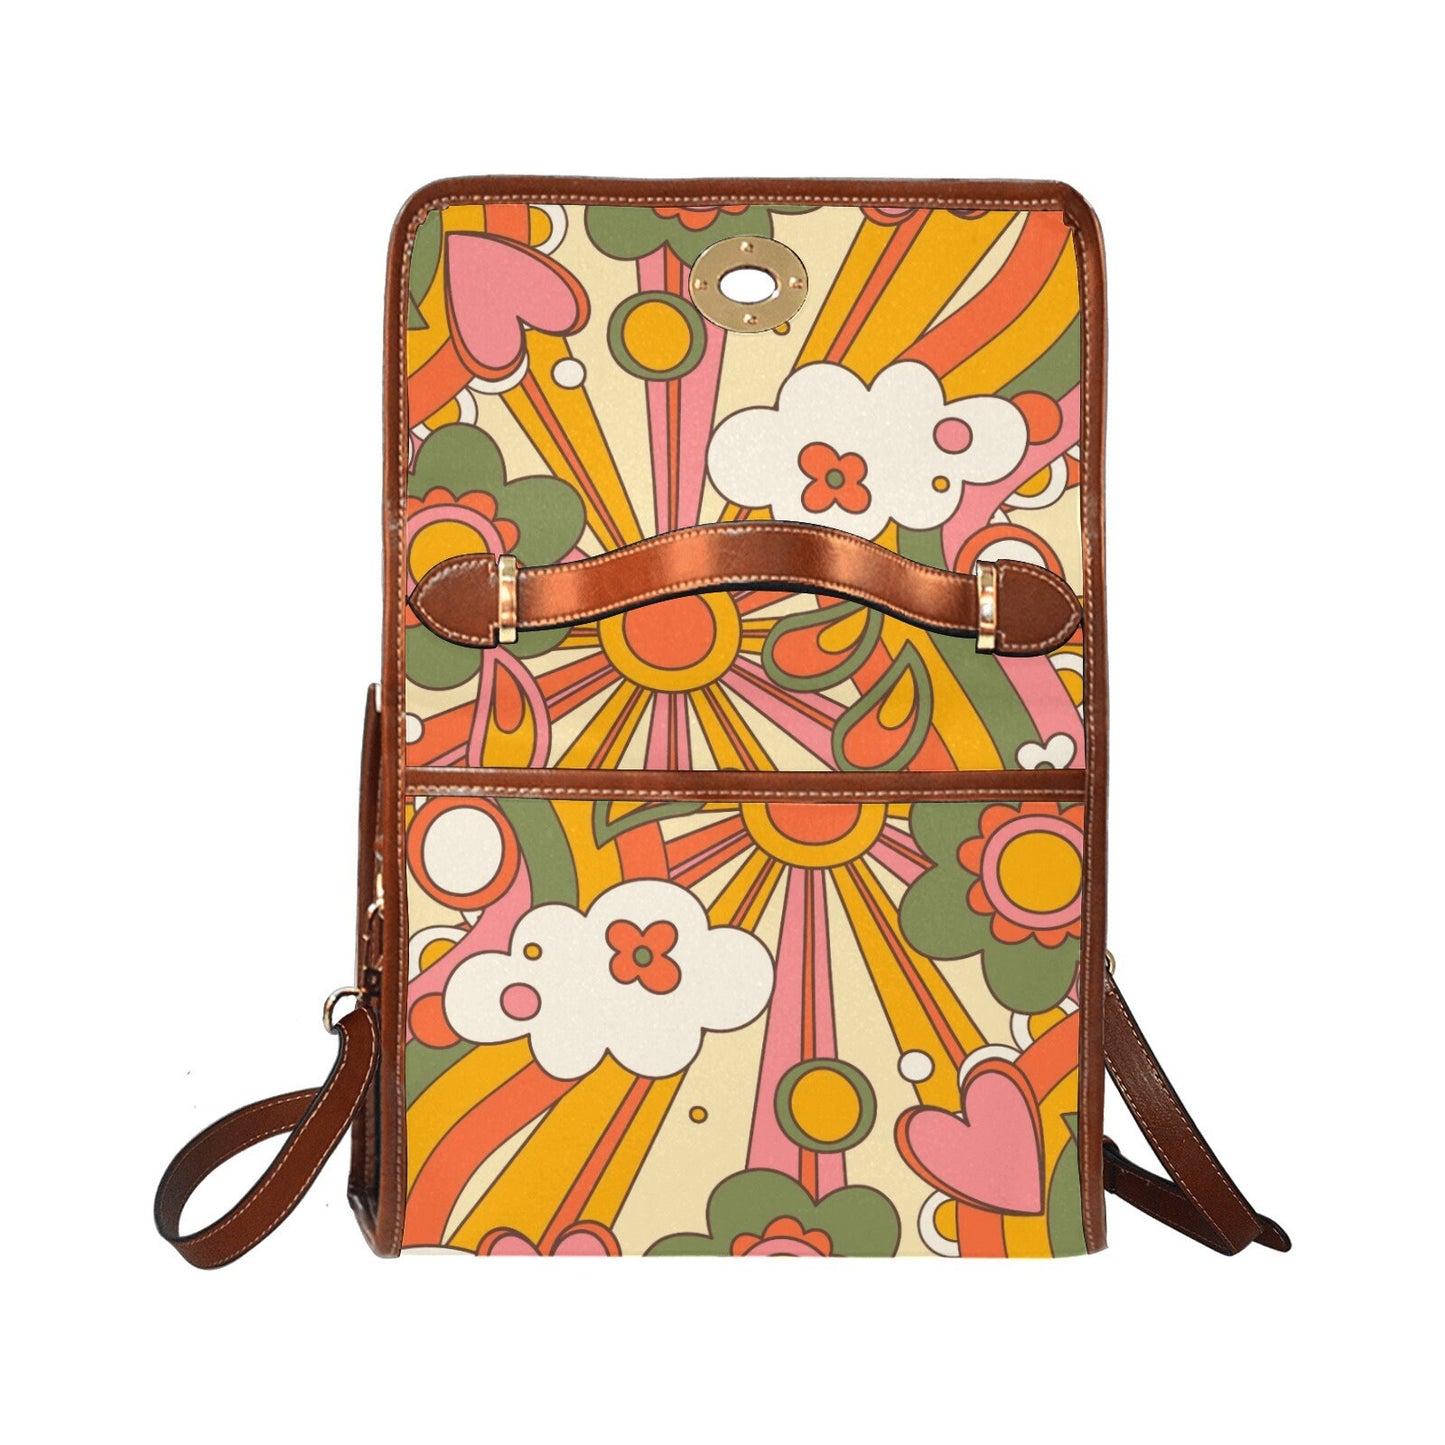 Women's Handbag, Women's Purse, Hippie Style Bag, Small handbag, Women's Bag, Retro Handbag, Retro Bag, Kawaii Bag, Multicolor Handbag